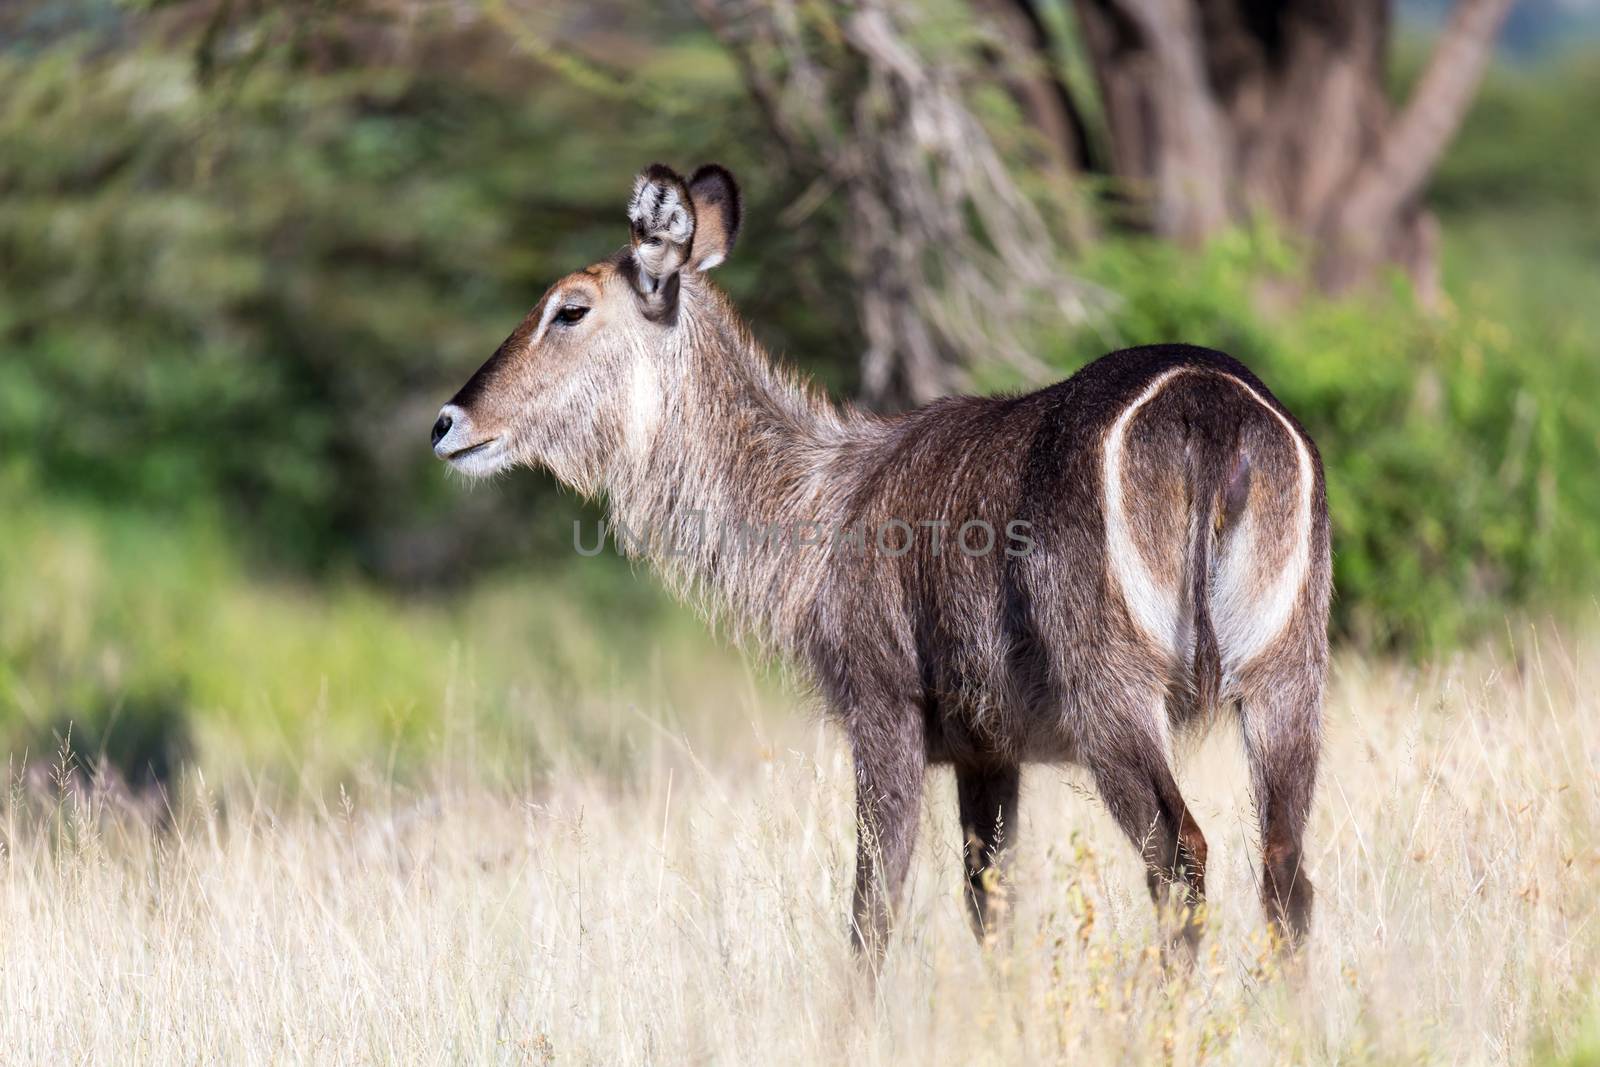 Antelope in the middle of the savannah of Kenya by 25ehaag6